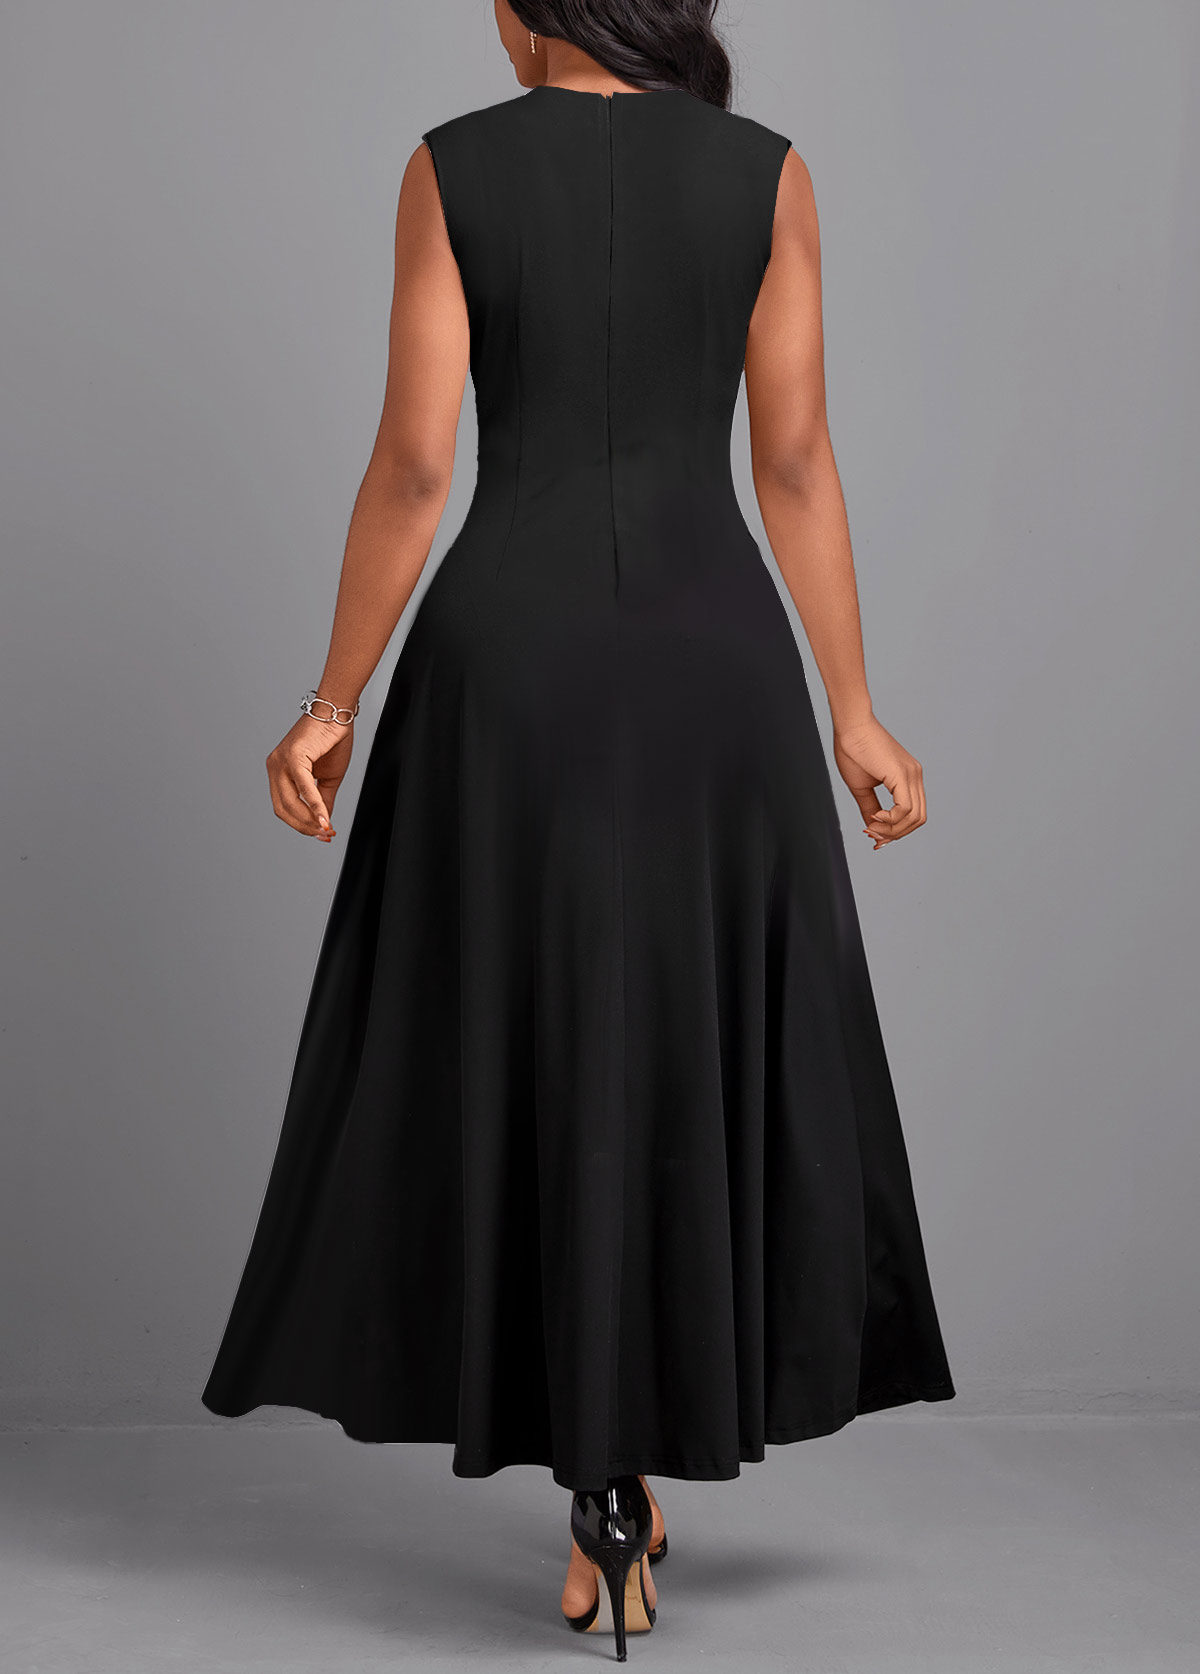 Floral Print Double Side Pockets Black Sleeveless Maxi Dress